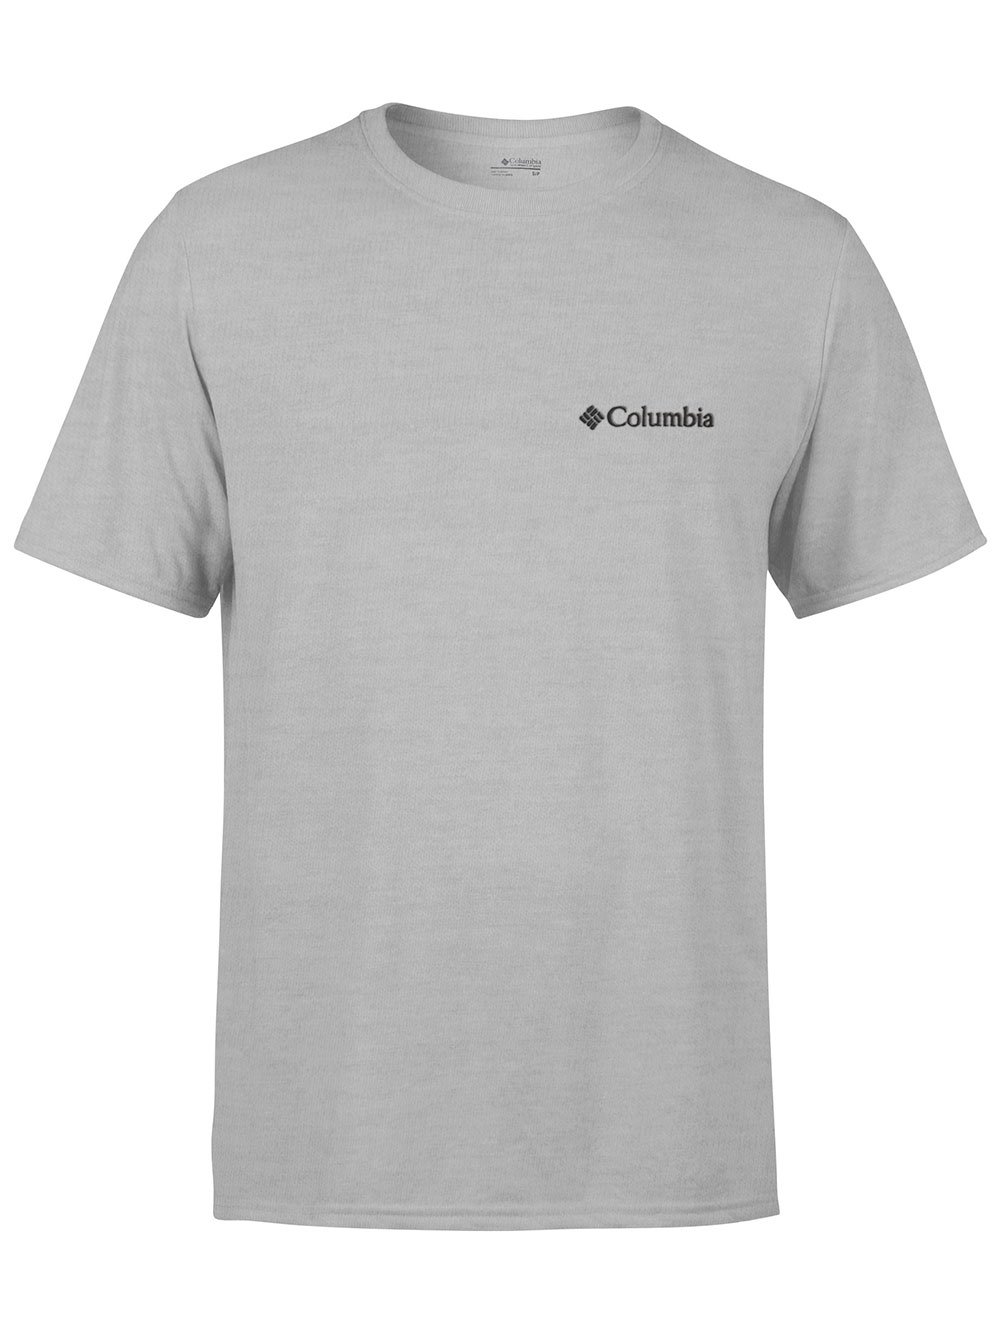 Camiseta Columbia Masculina Basic Logo Cinza Mescla